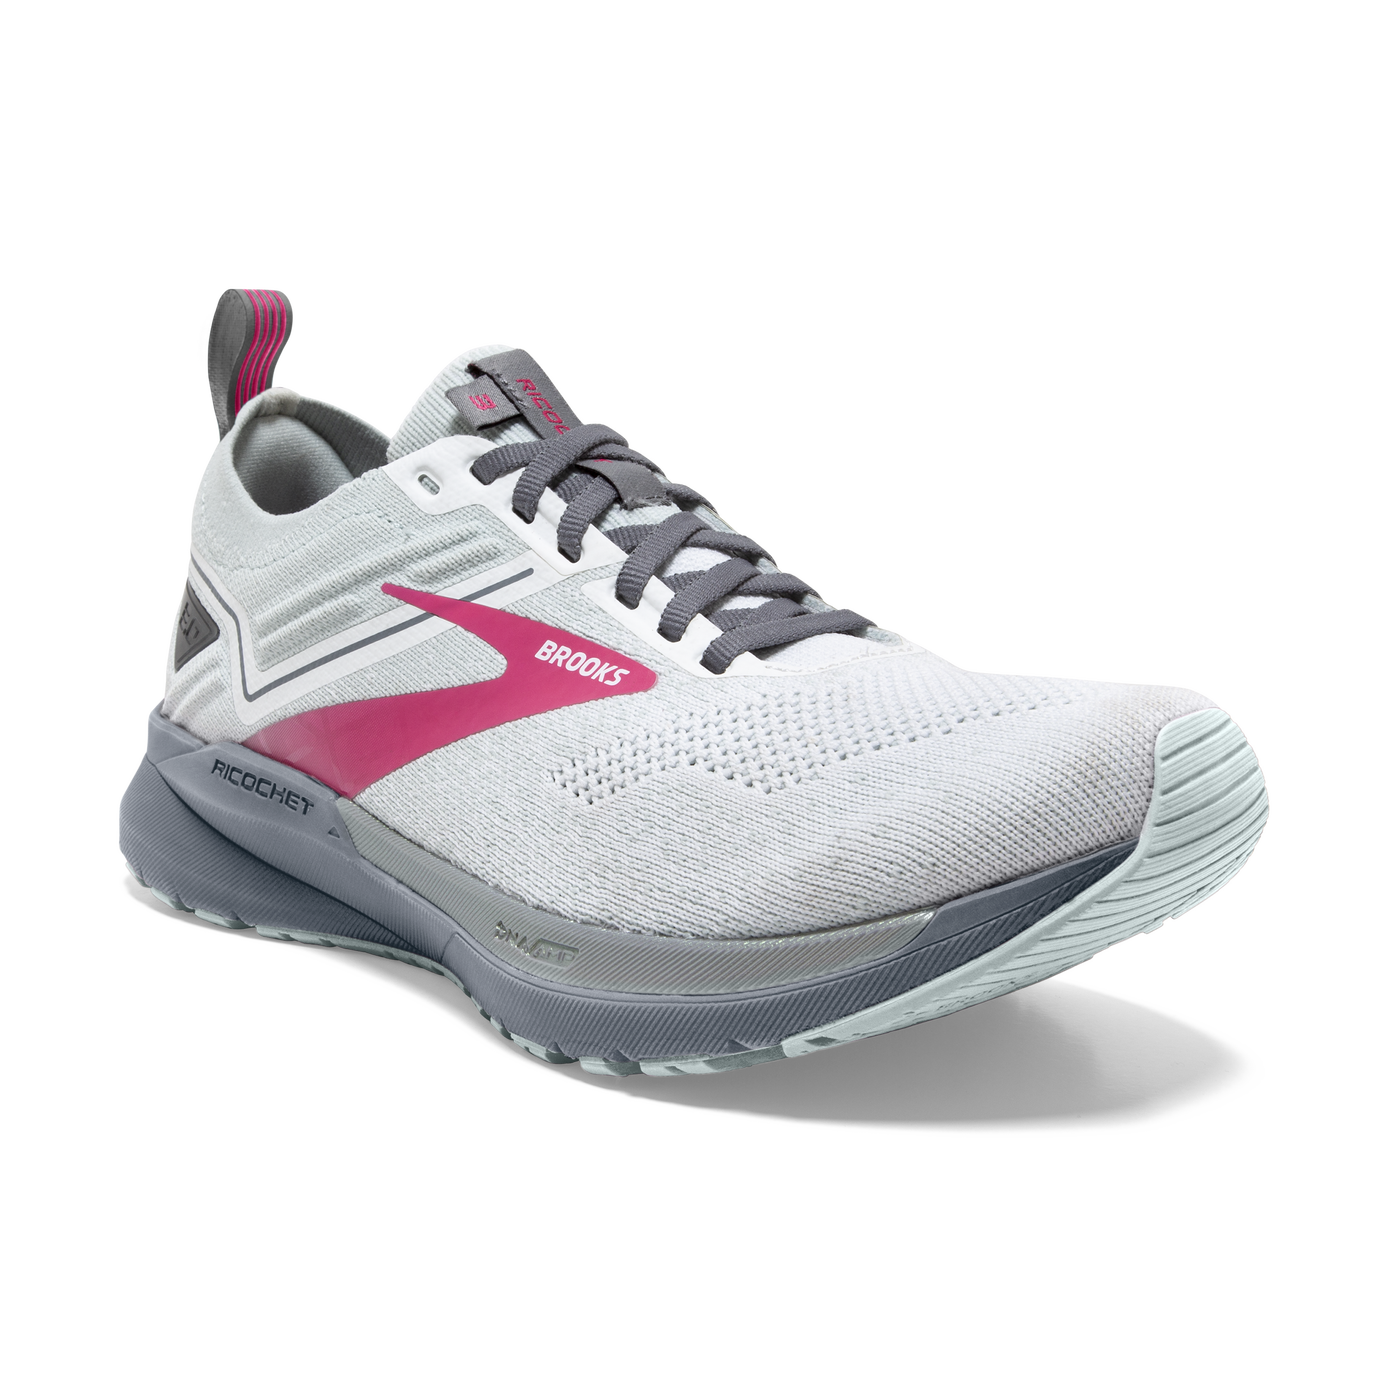 Brooks Ricochet Black Grey Silver Women Running Training Shoes Sneaker 120282 1B 